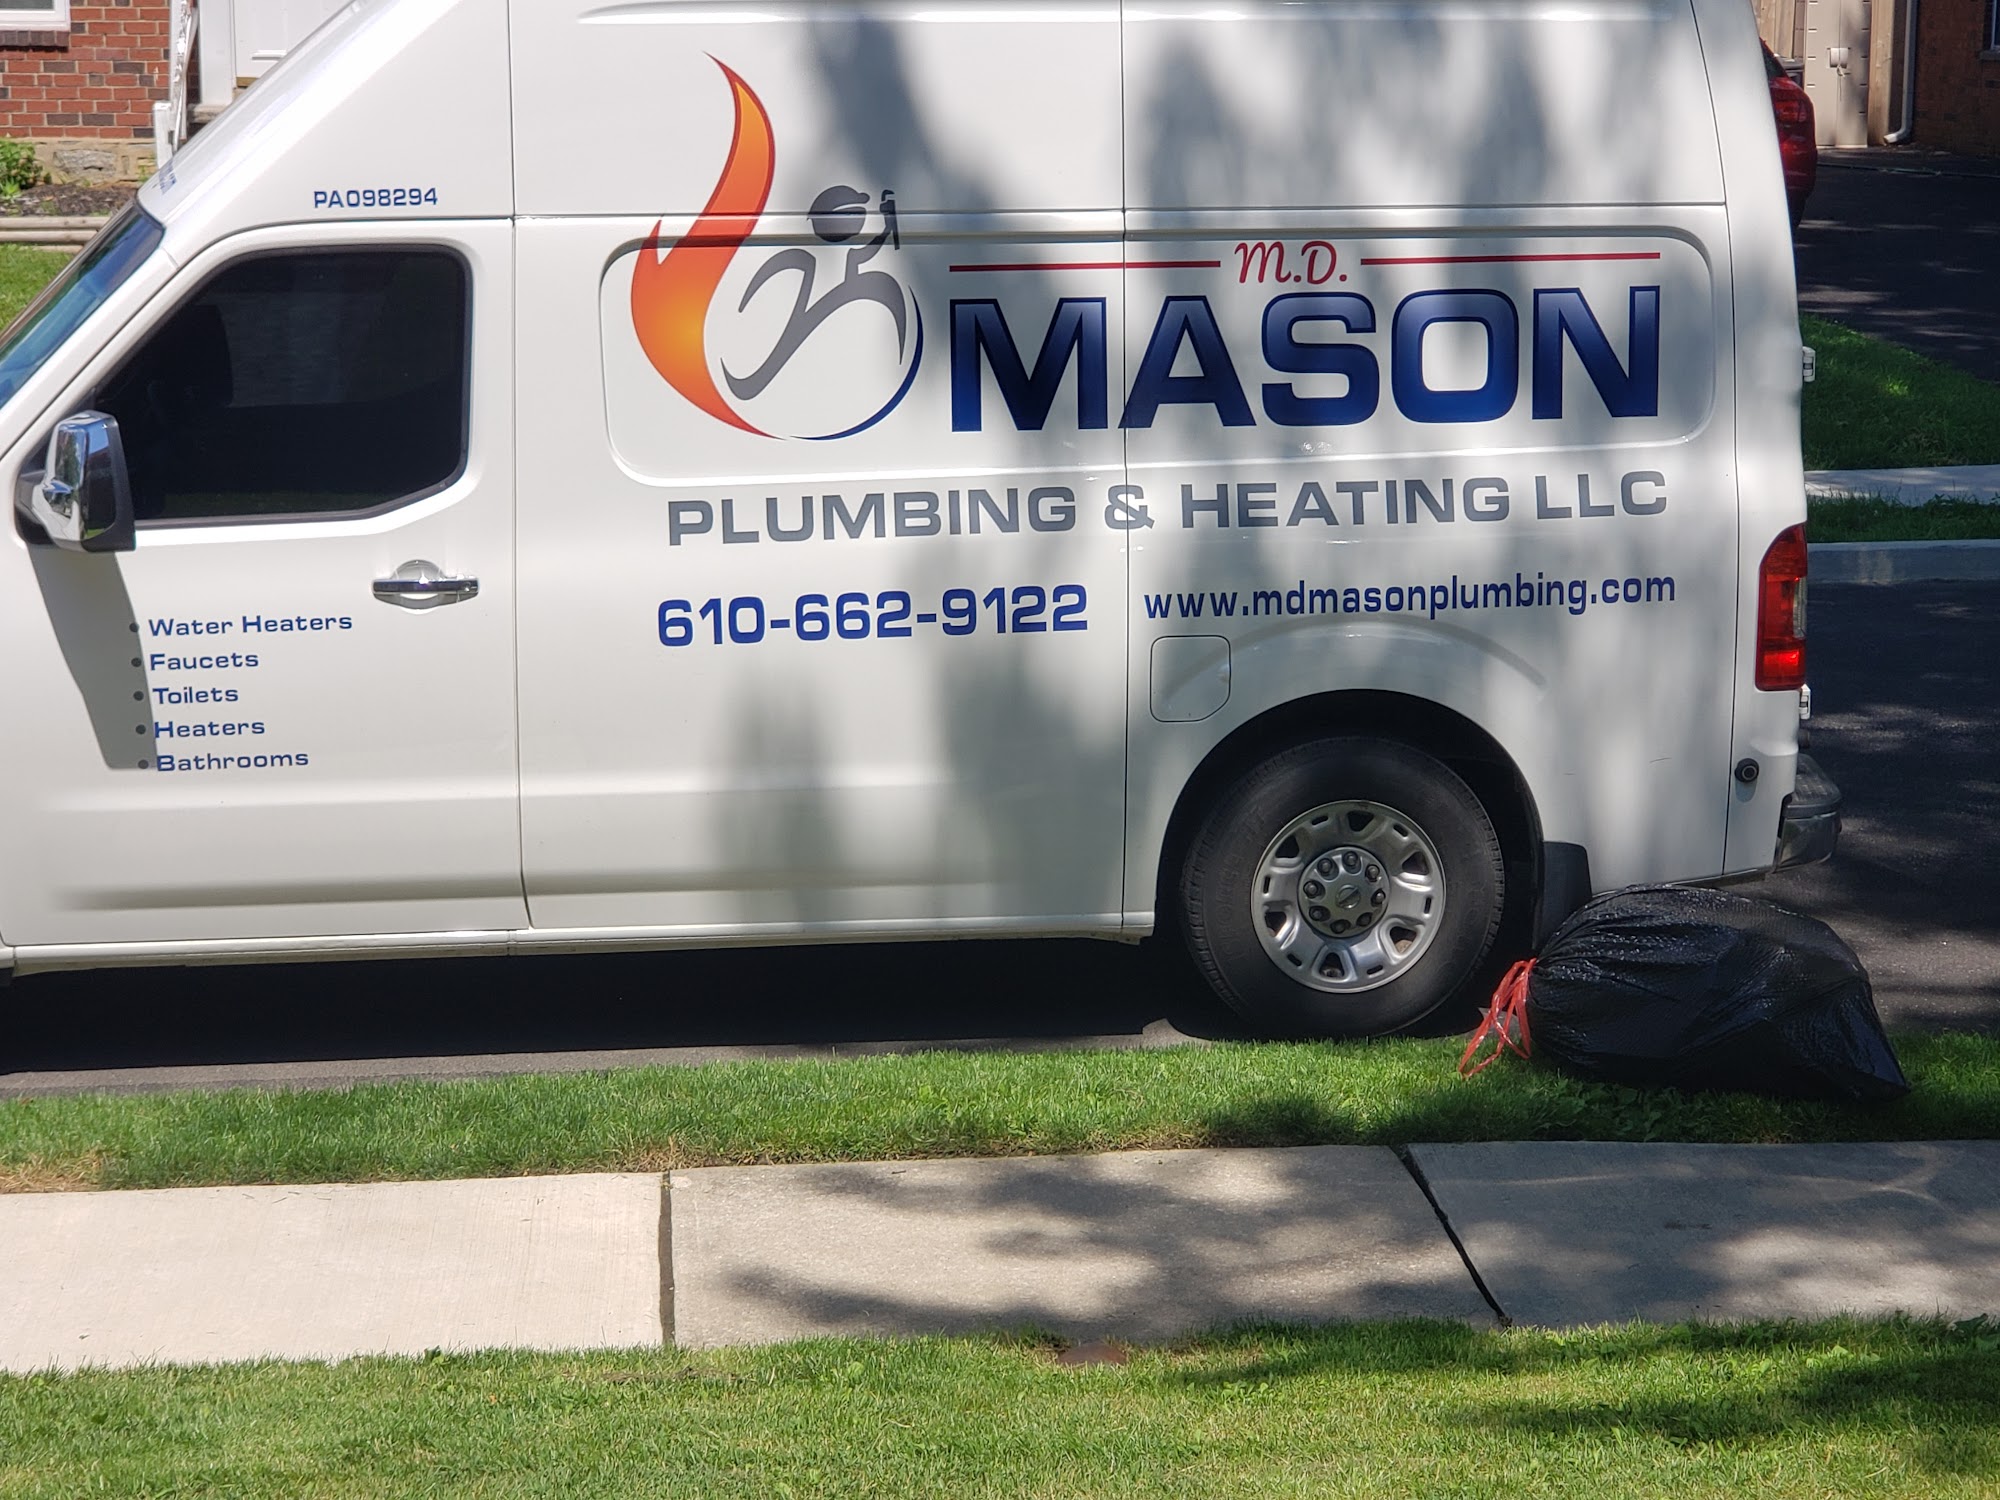 M. D. Mason Plumbing & Heating LLC